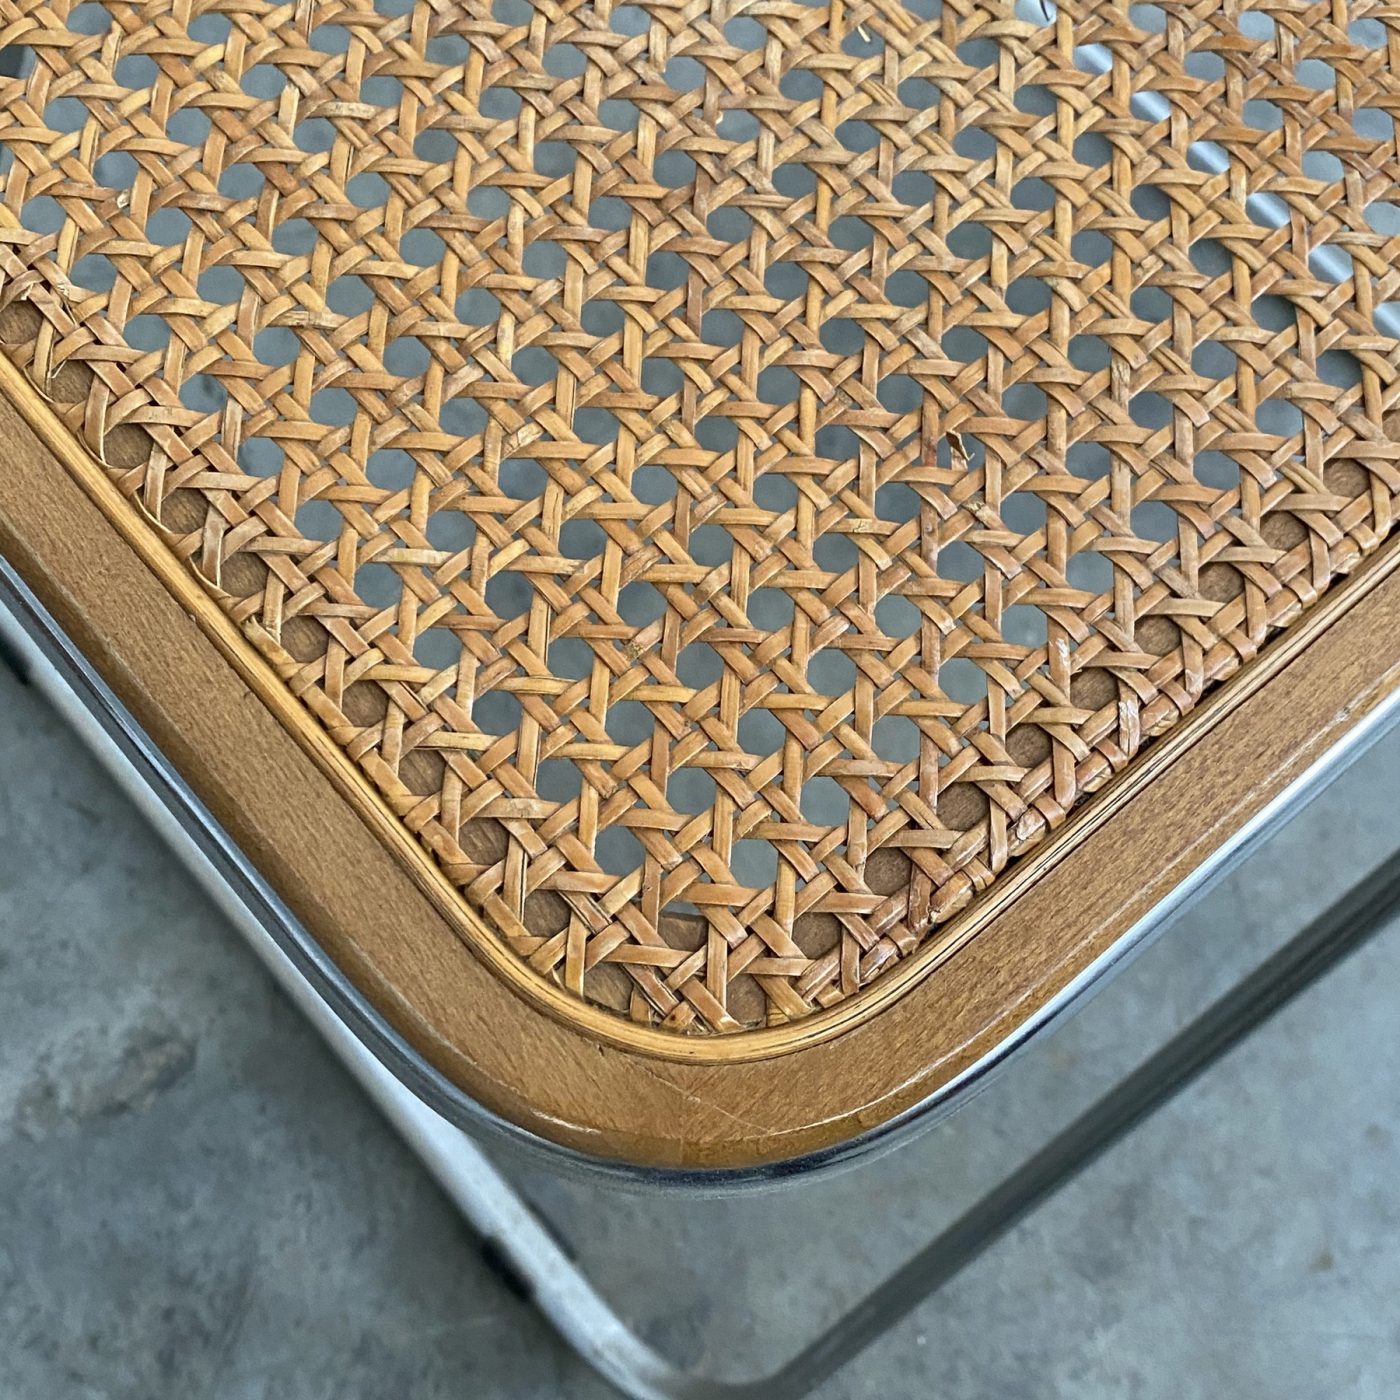 objet-vagabond-folding-chairs0003